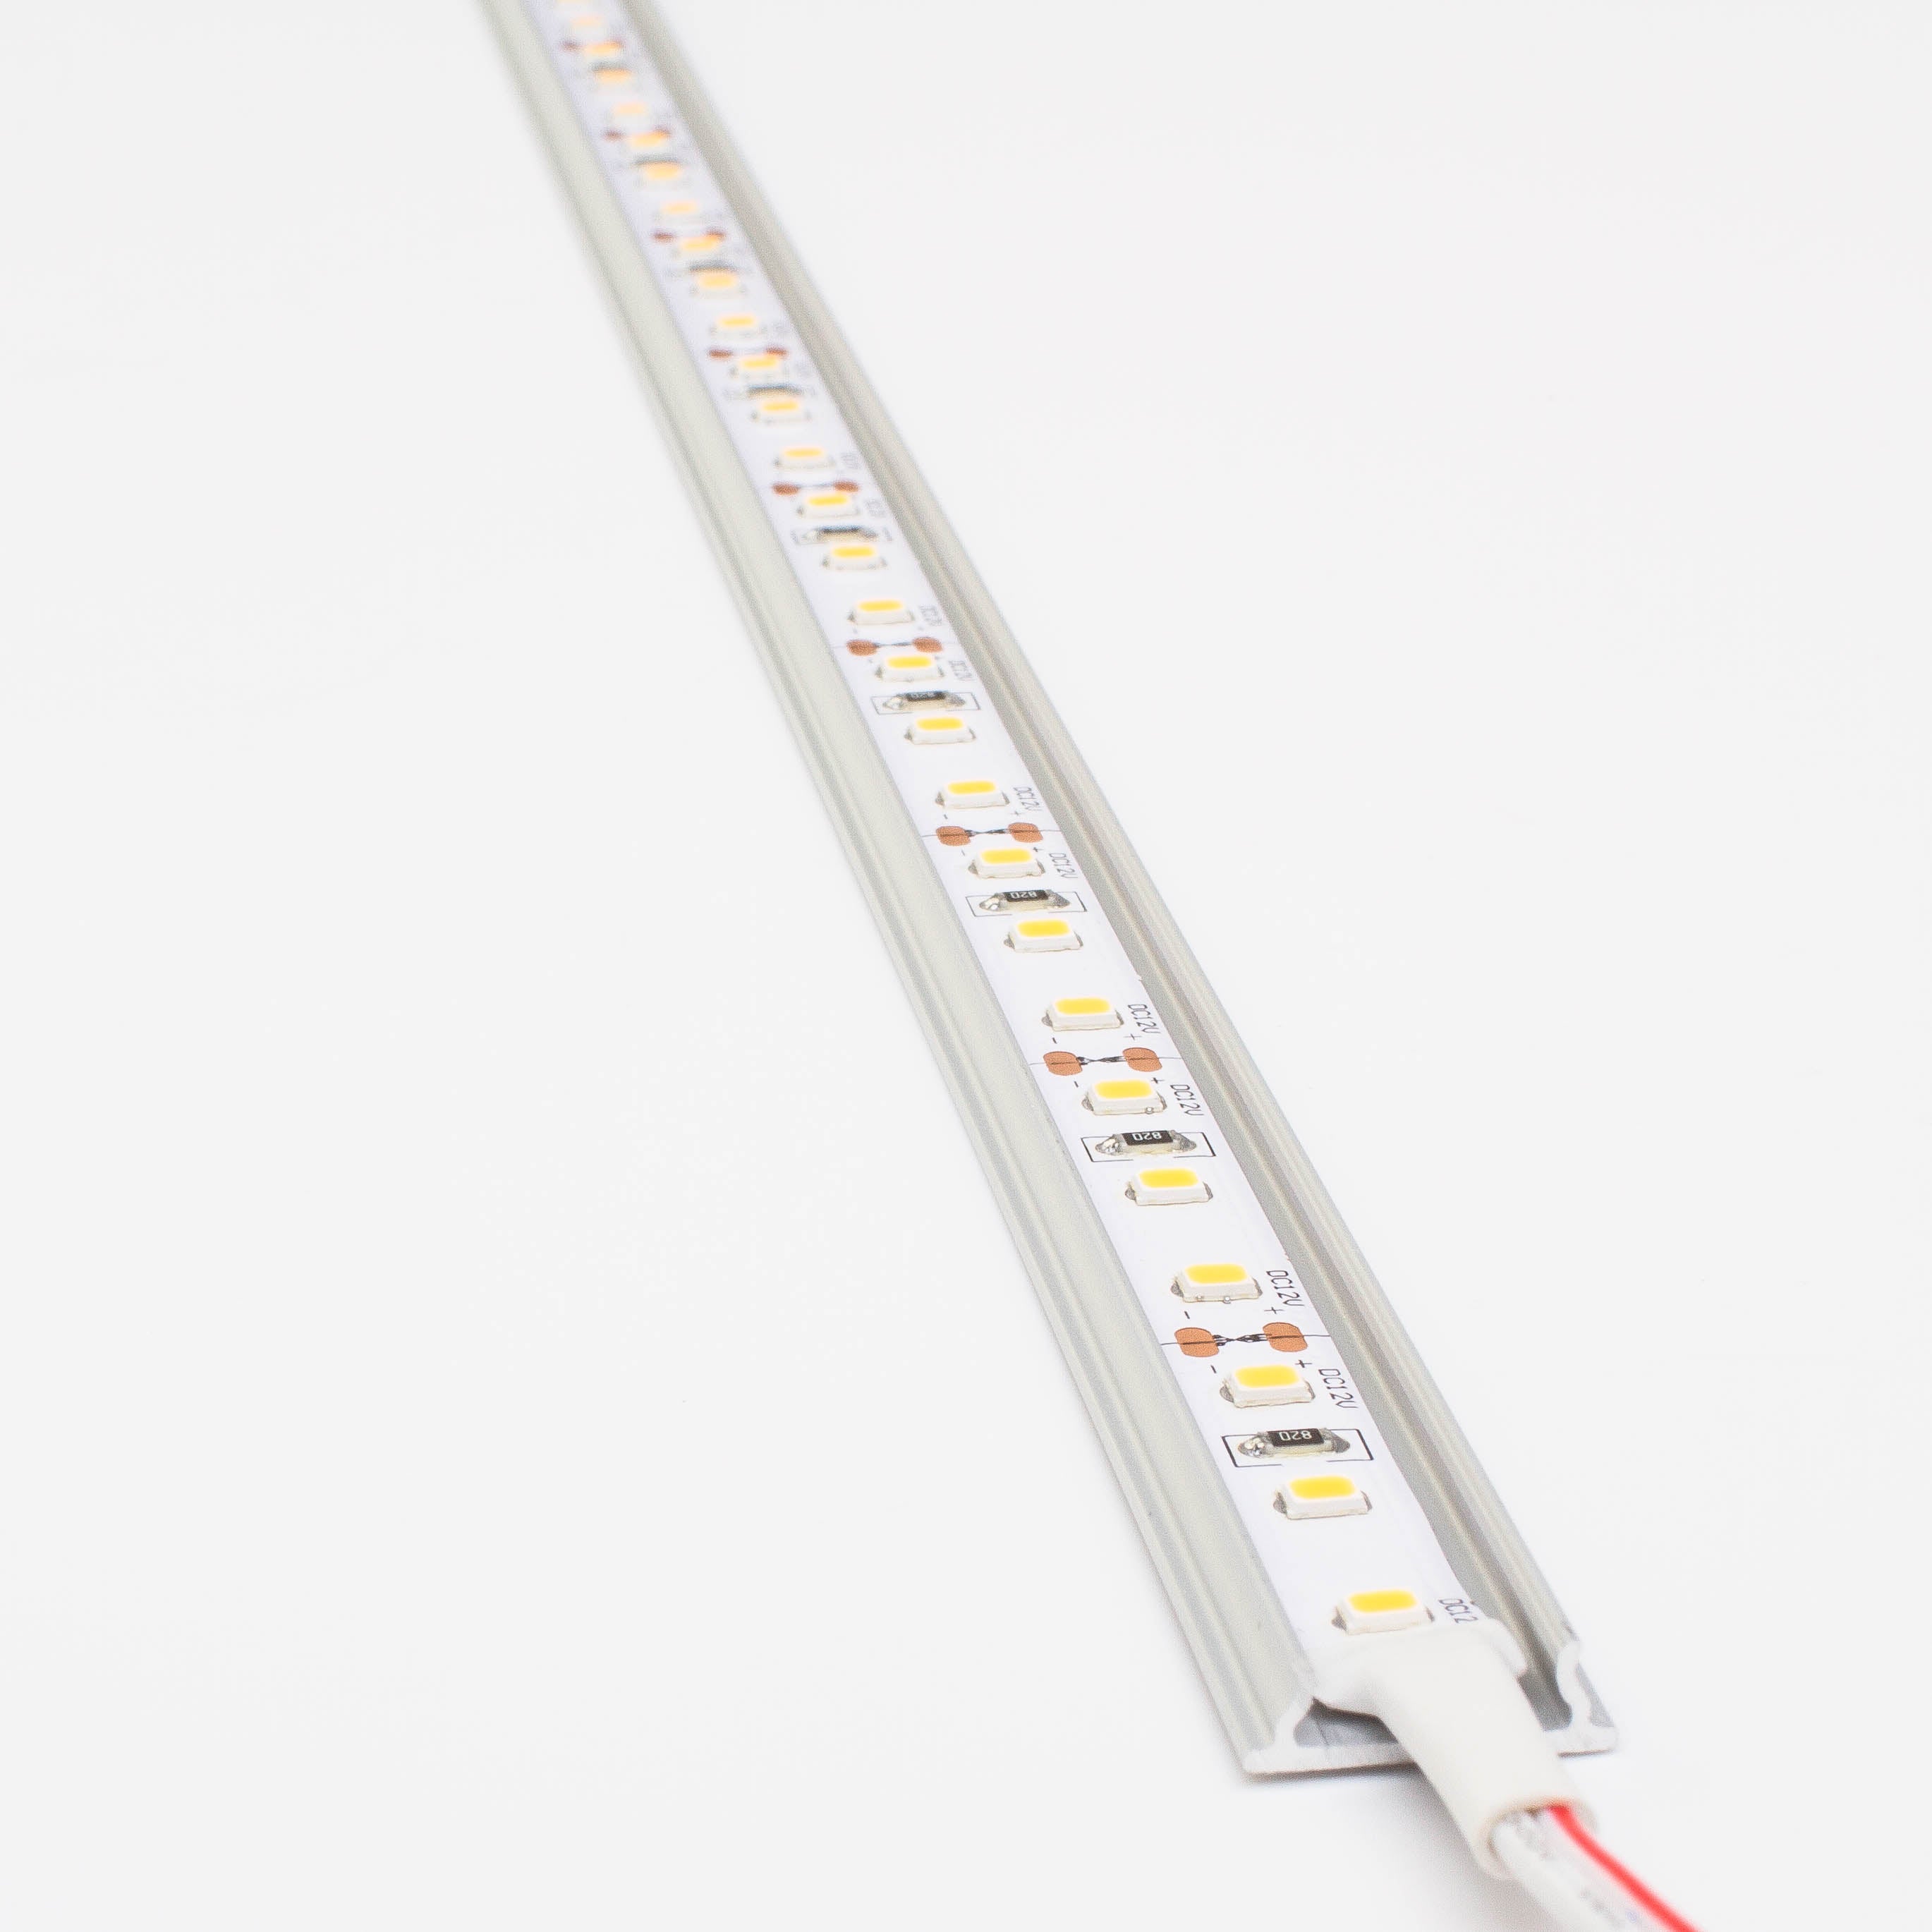 12v 2835 Series CRI 90+ 4000k Natural white color LED strip light + Aluminum Channel